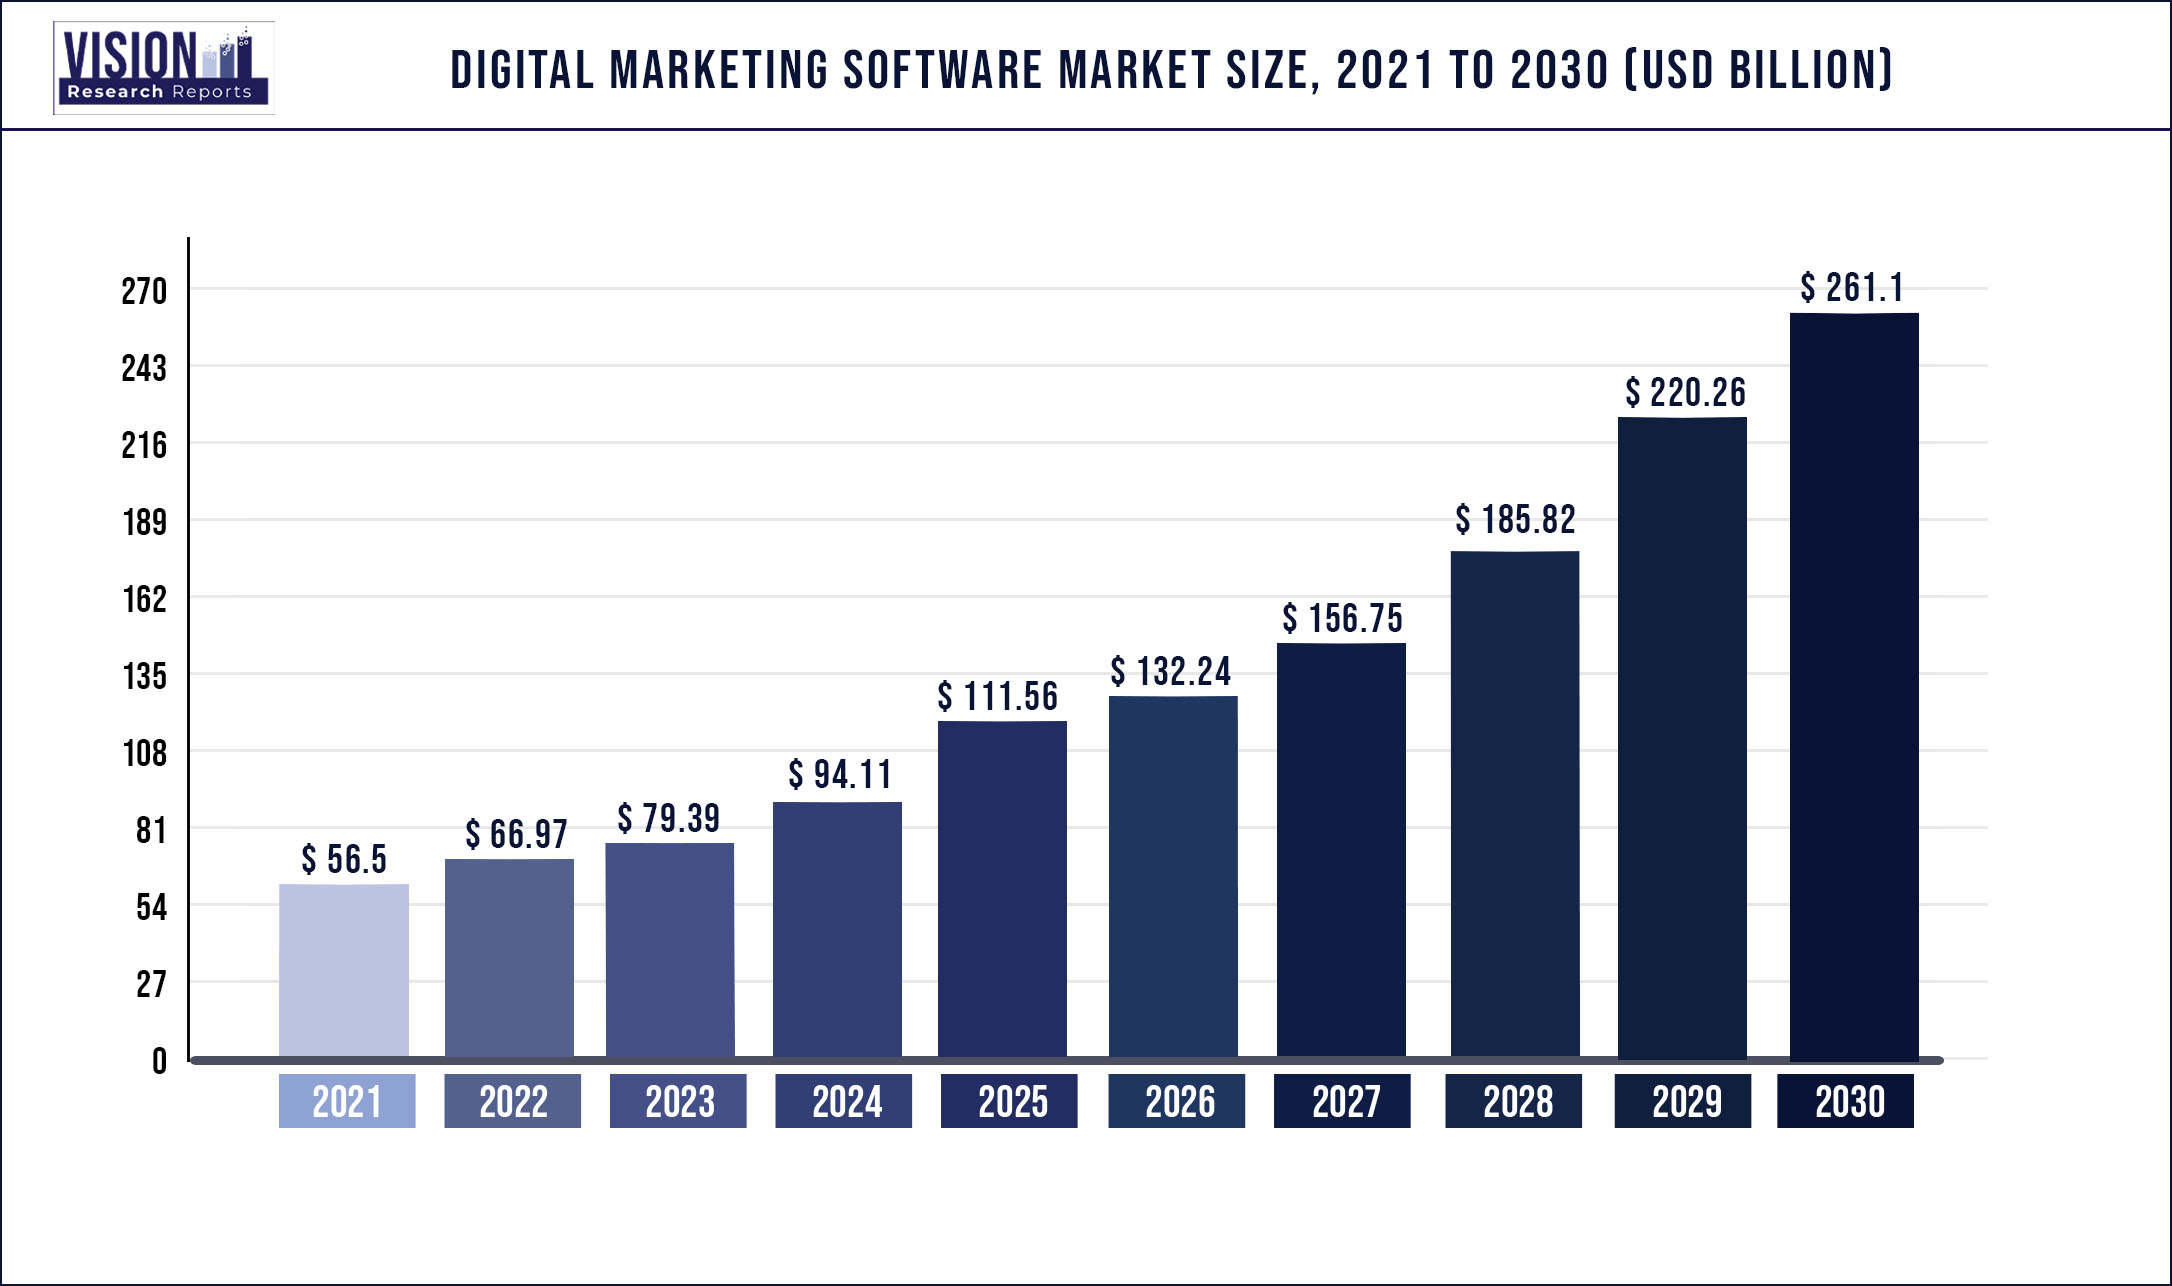 Digital Marketing Software Market Size 2021 to 2030